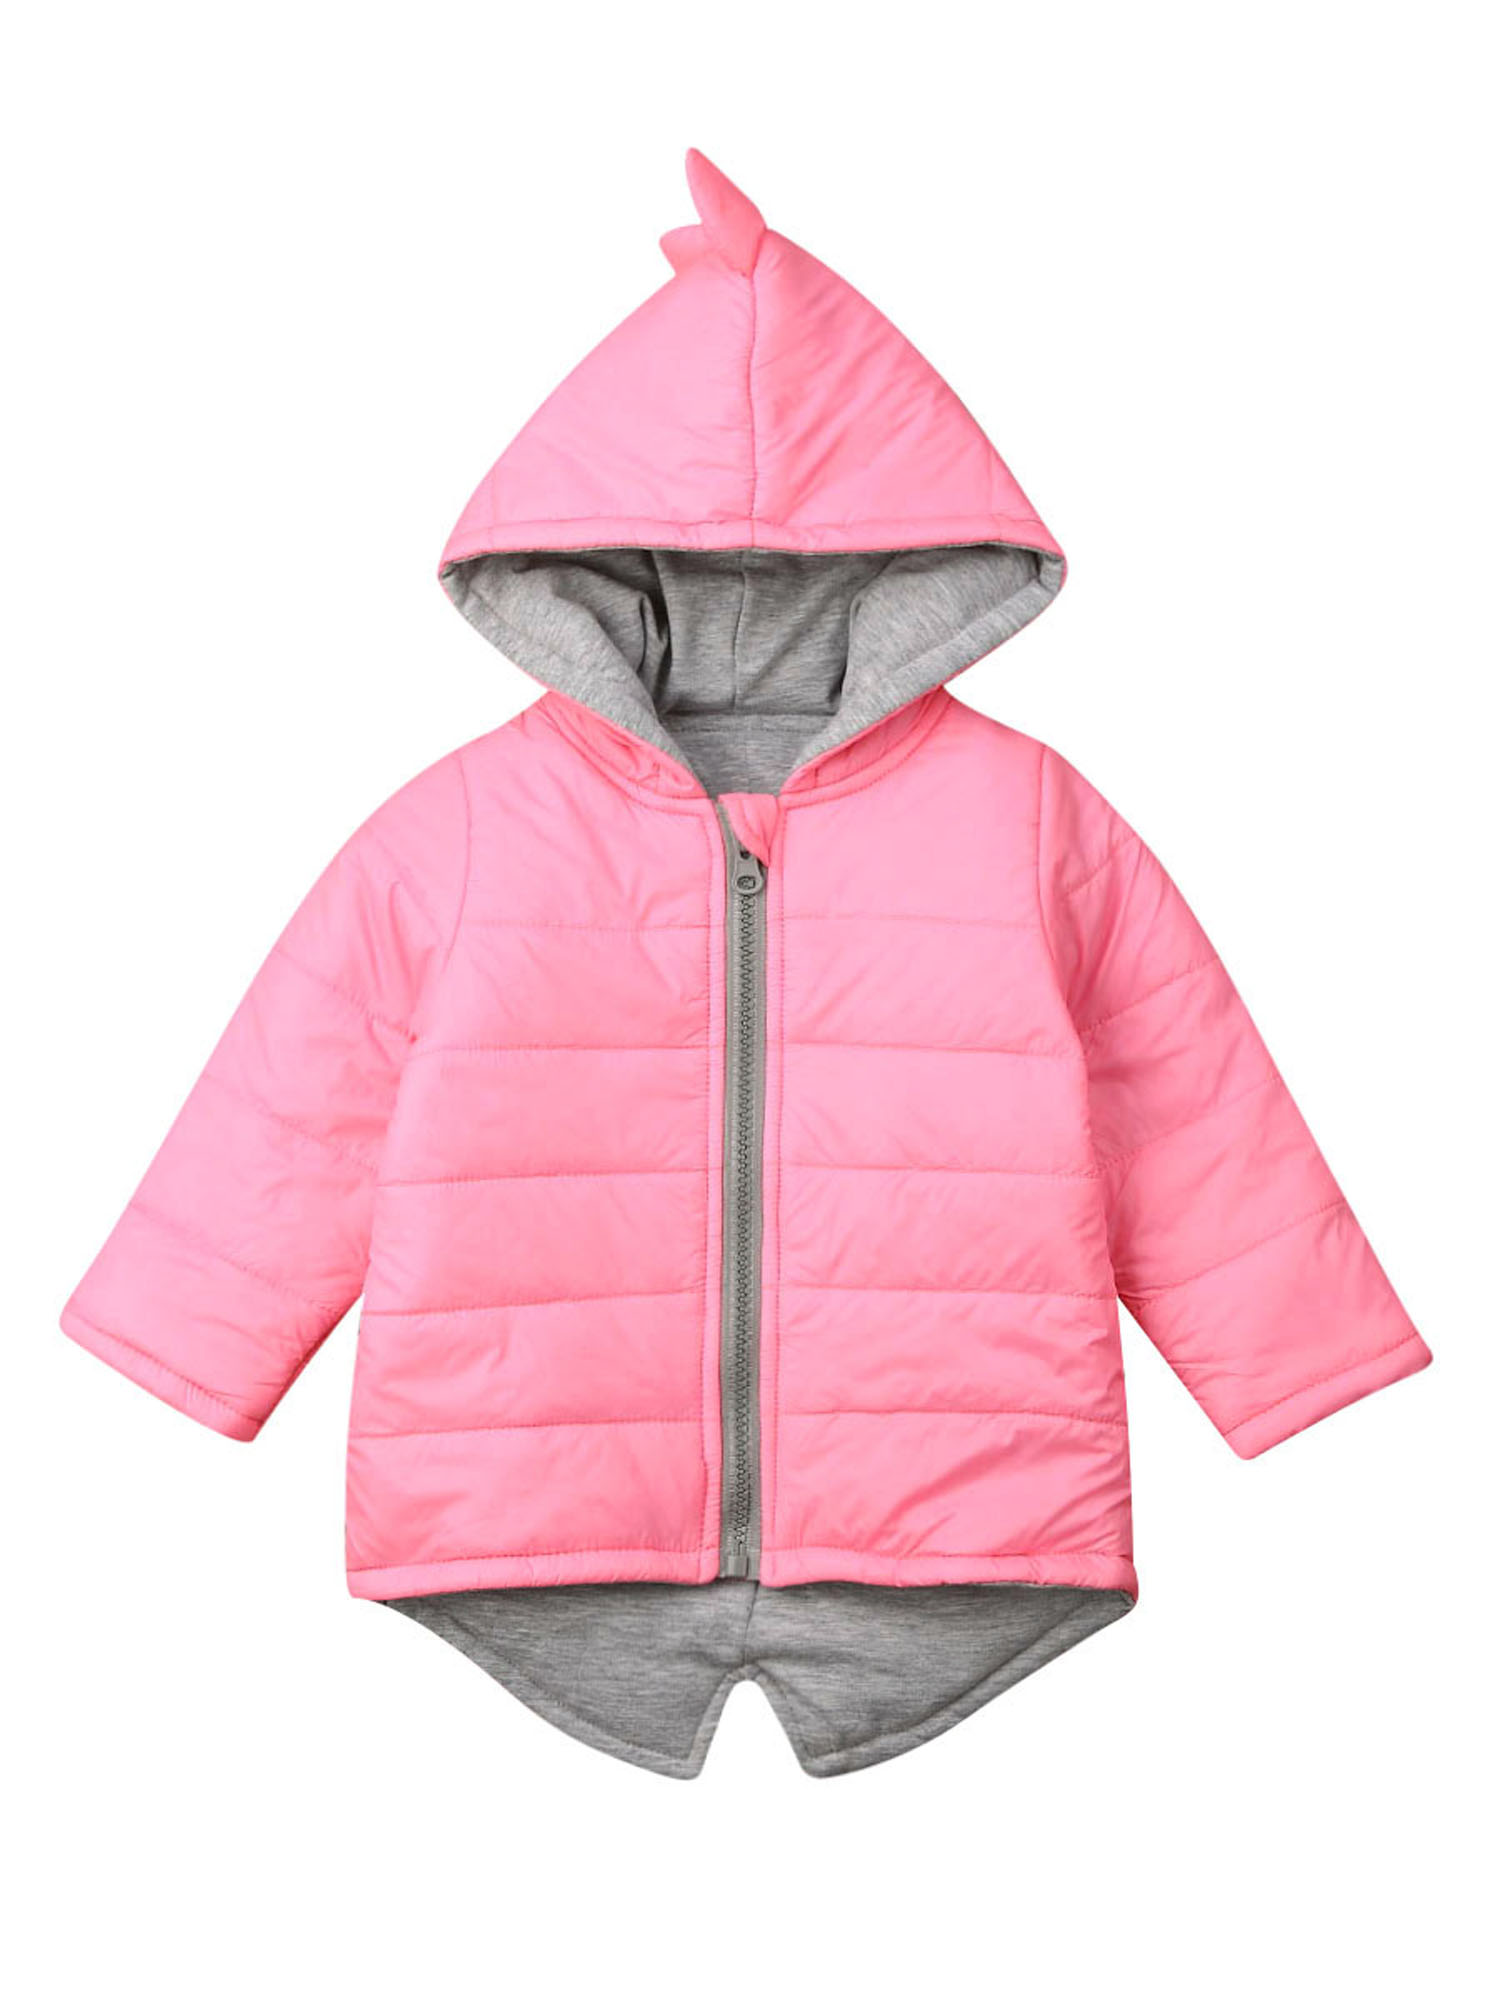 Toddler Baby Boys Girls Coat Long Sleeve Hooded Padded Jacket Winter Warm Light Puffer Jacket Outwear - image 1 of 6